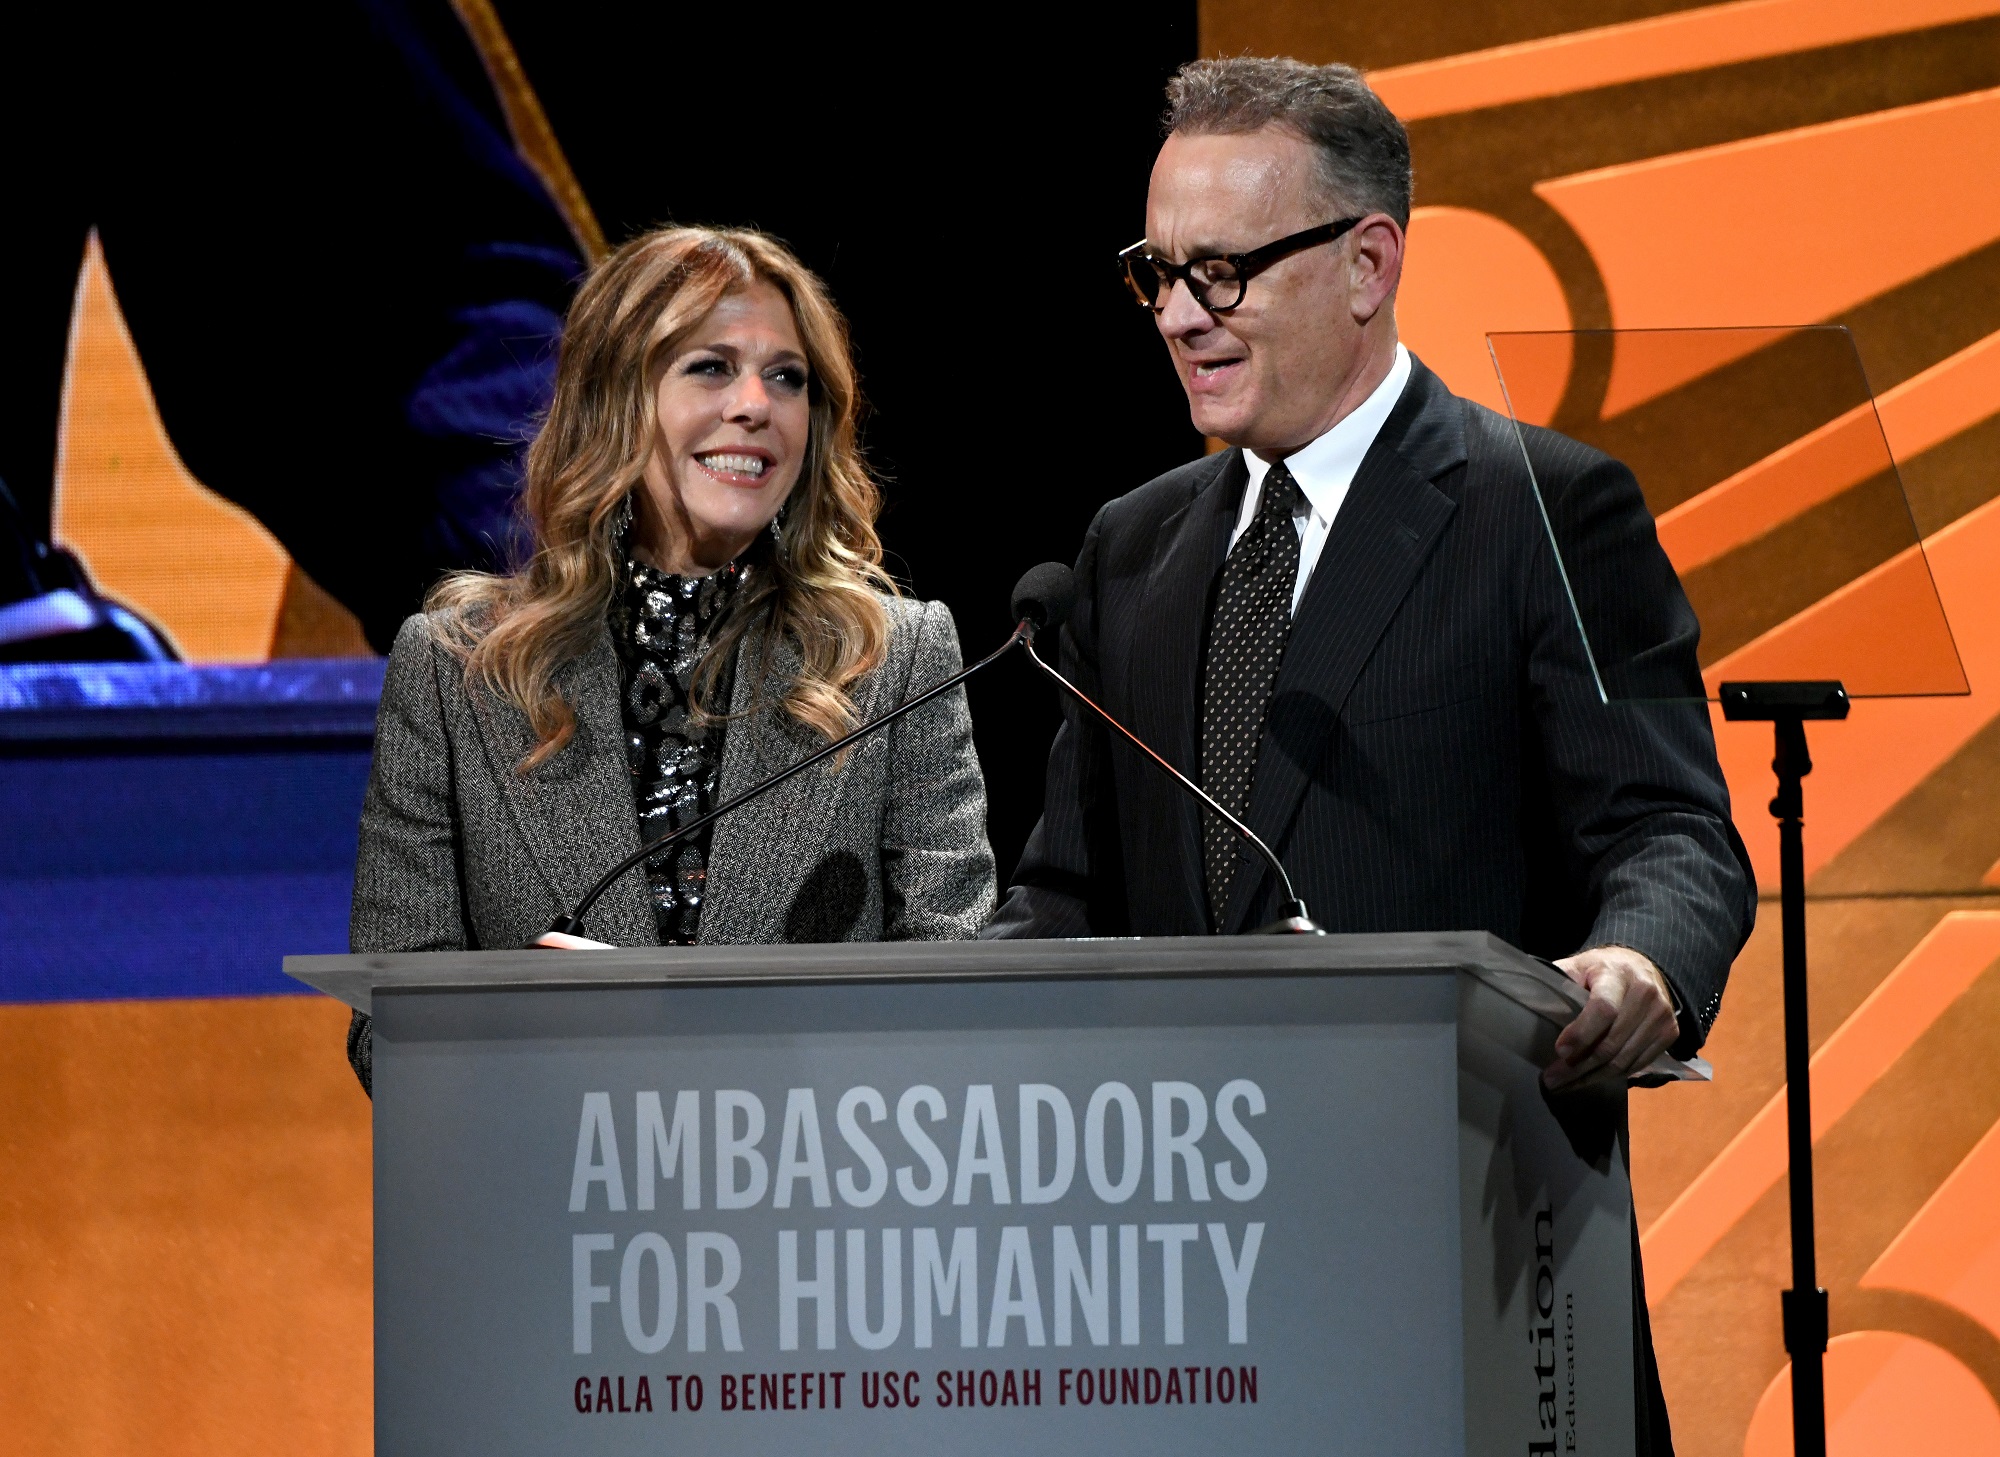 Rita Wilson and Tom Hanks speak at a podium together